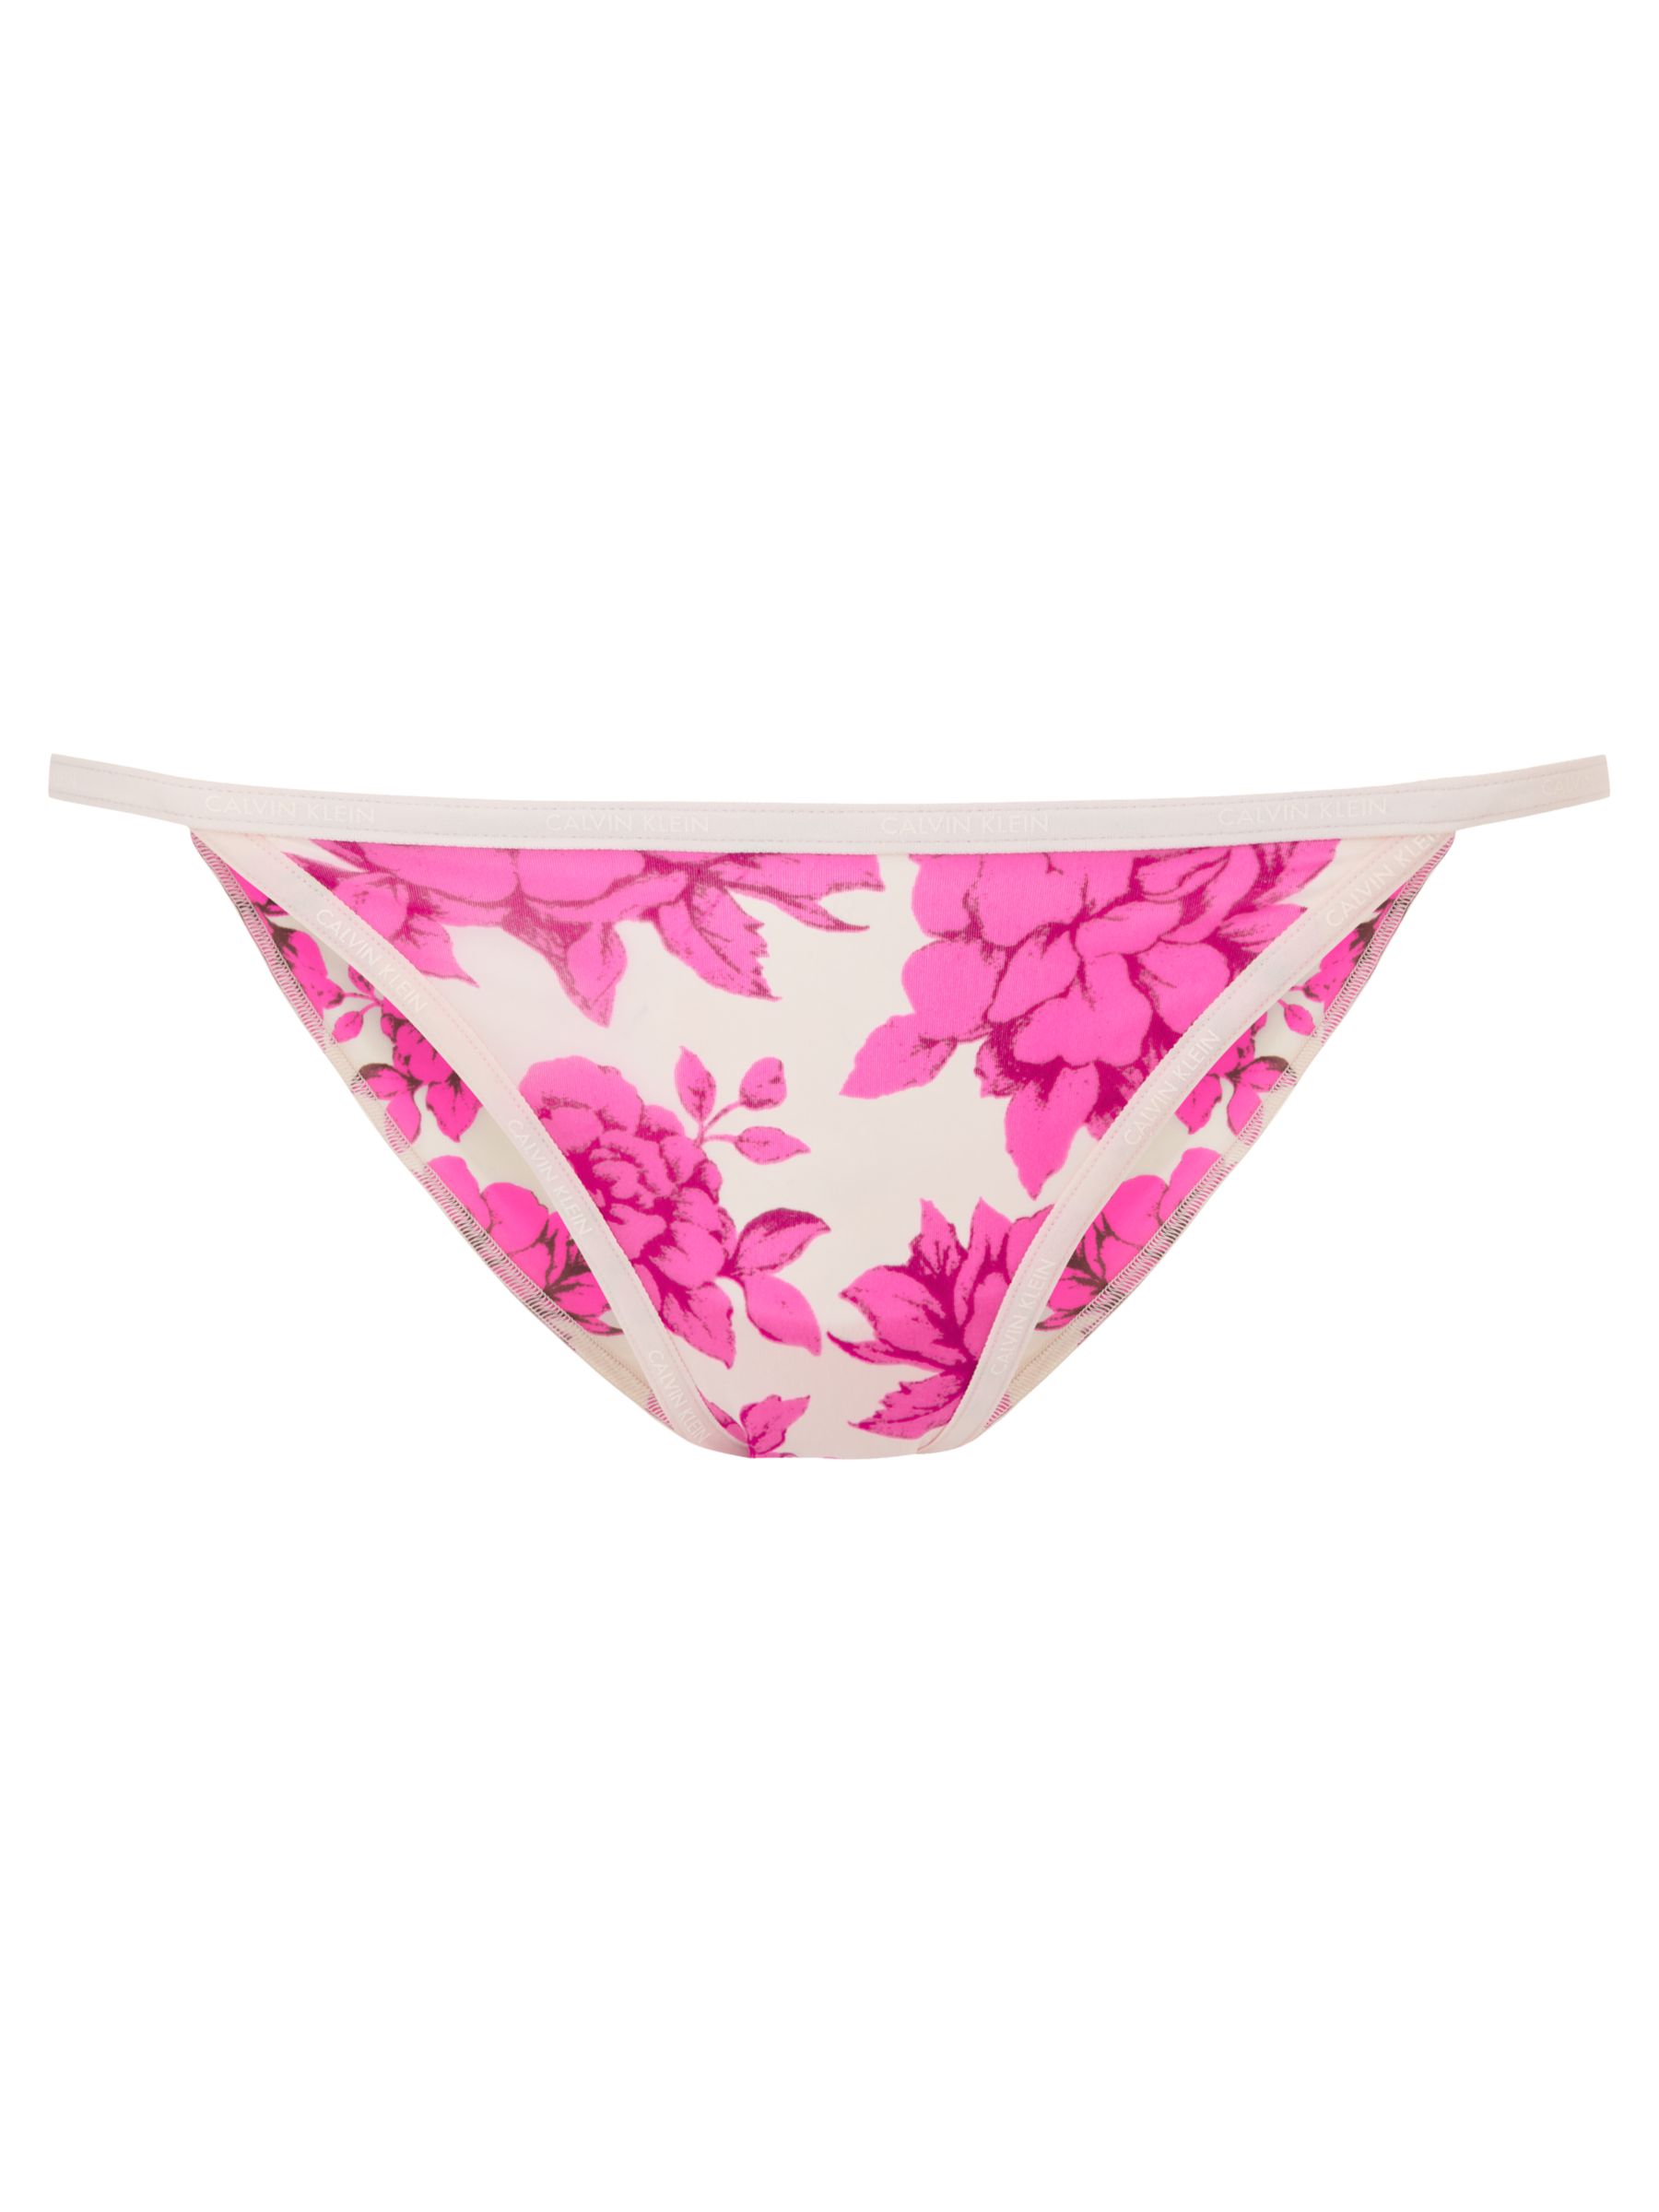 Calvin Klein Underwear Sheer Marquisette Bikini Briefs, Darling Roses